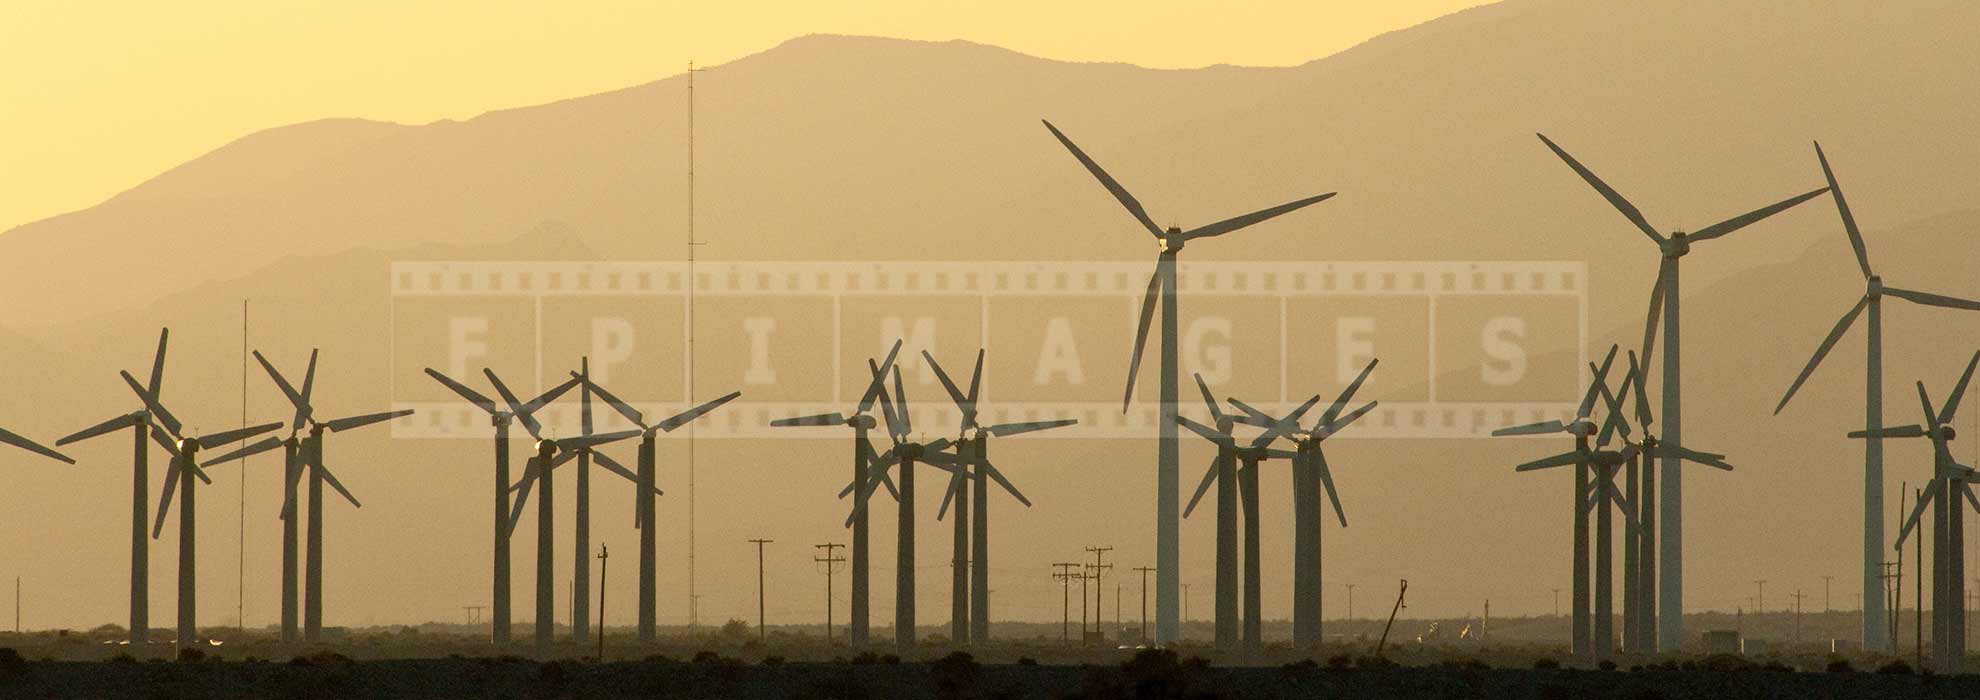 wind turbines generating green energy in California